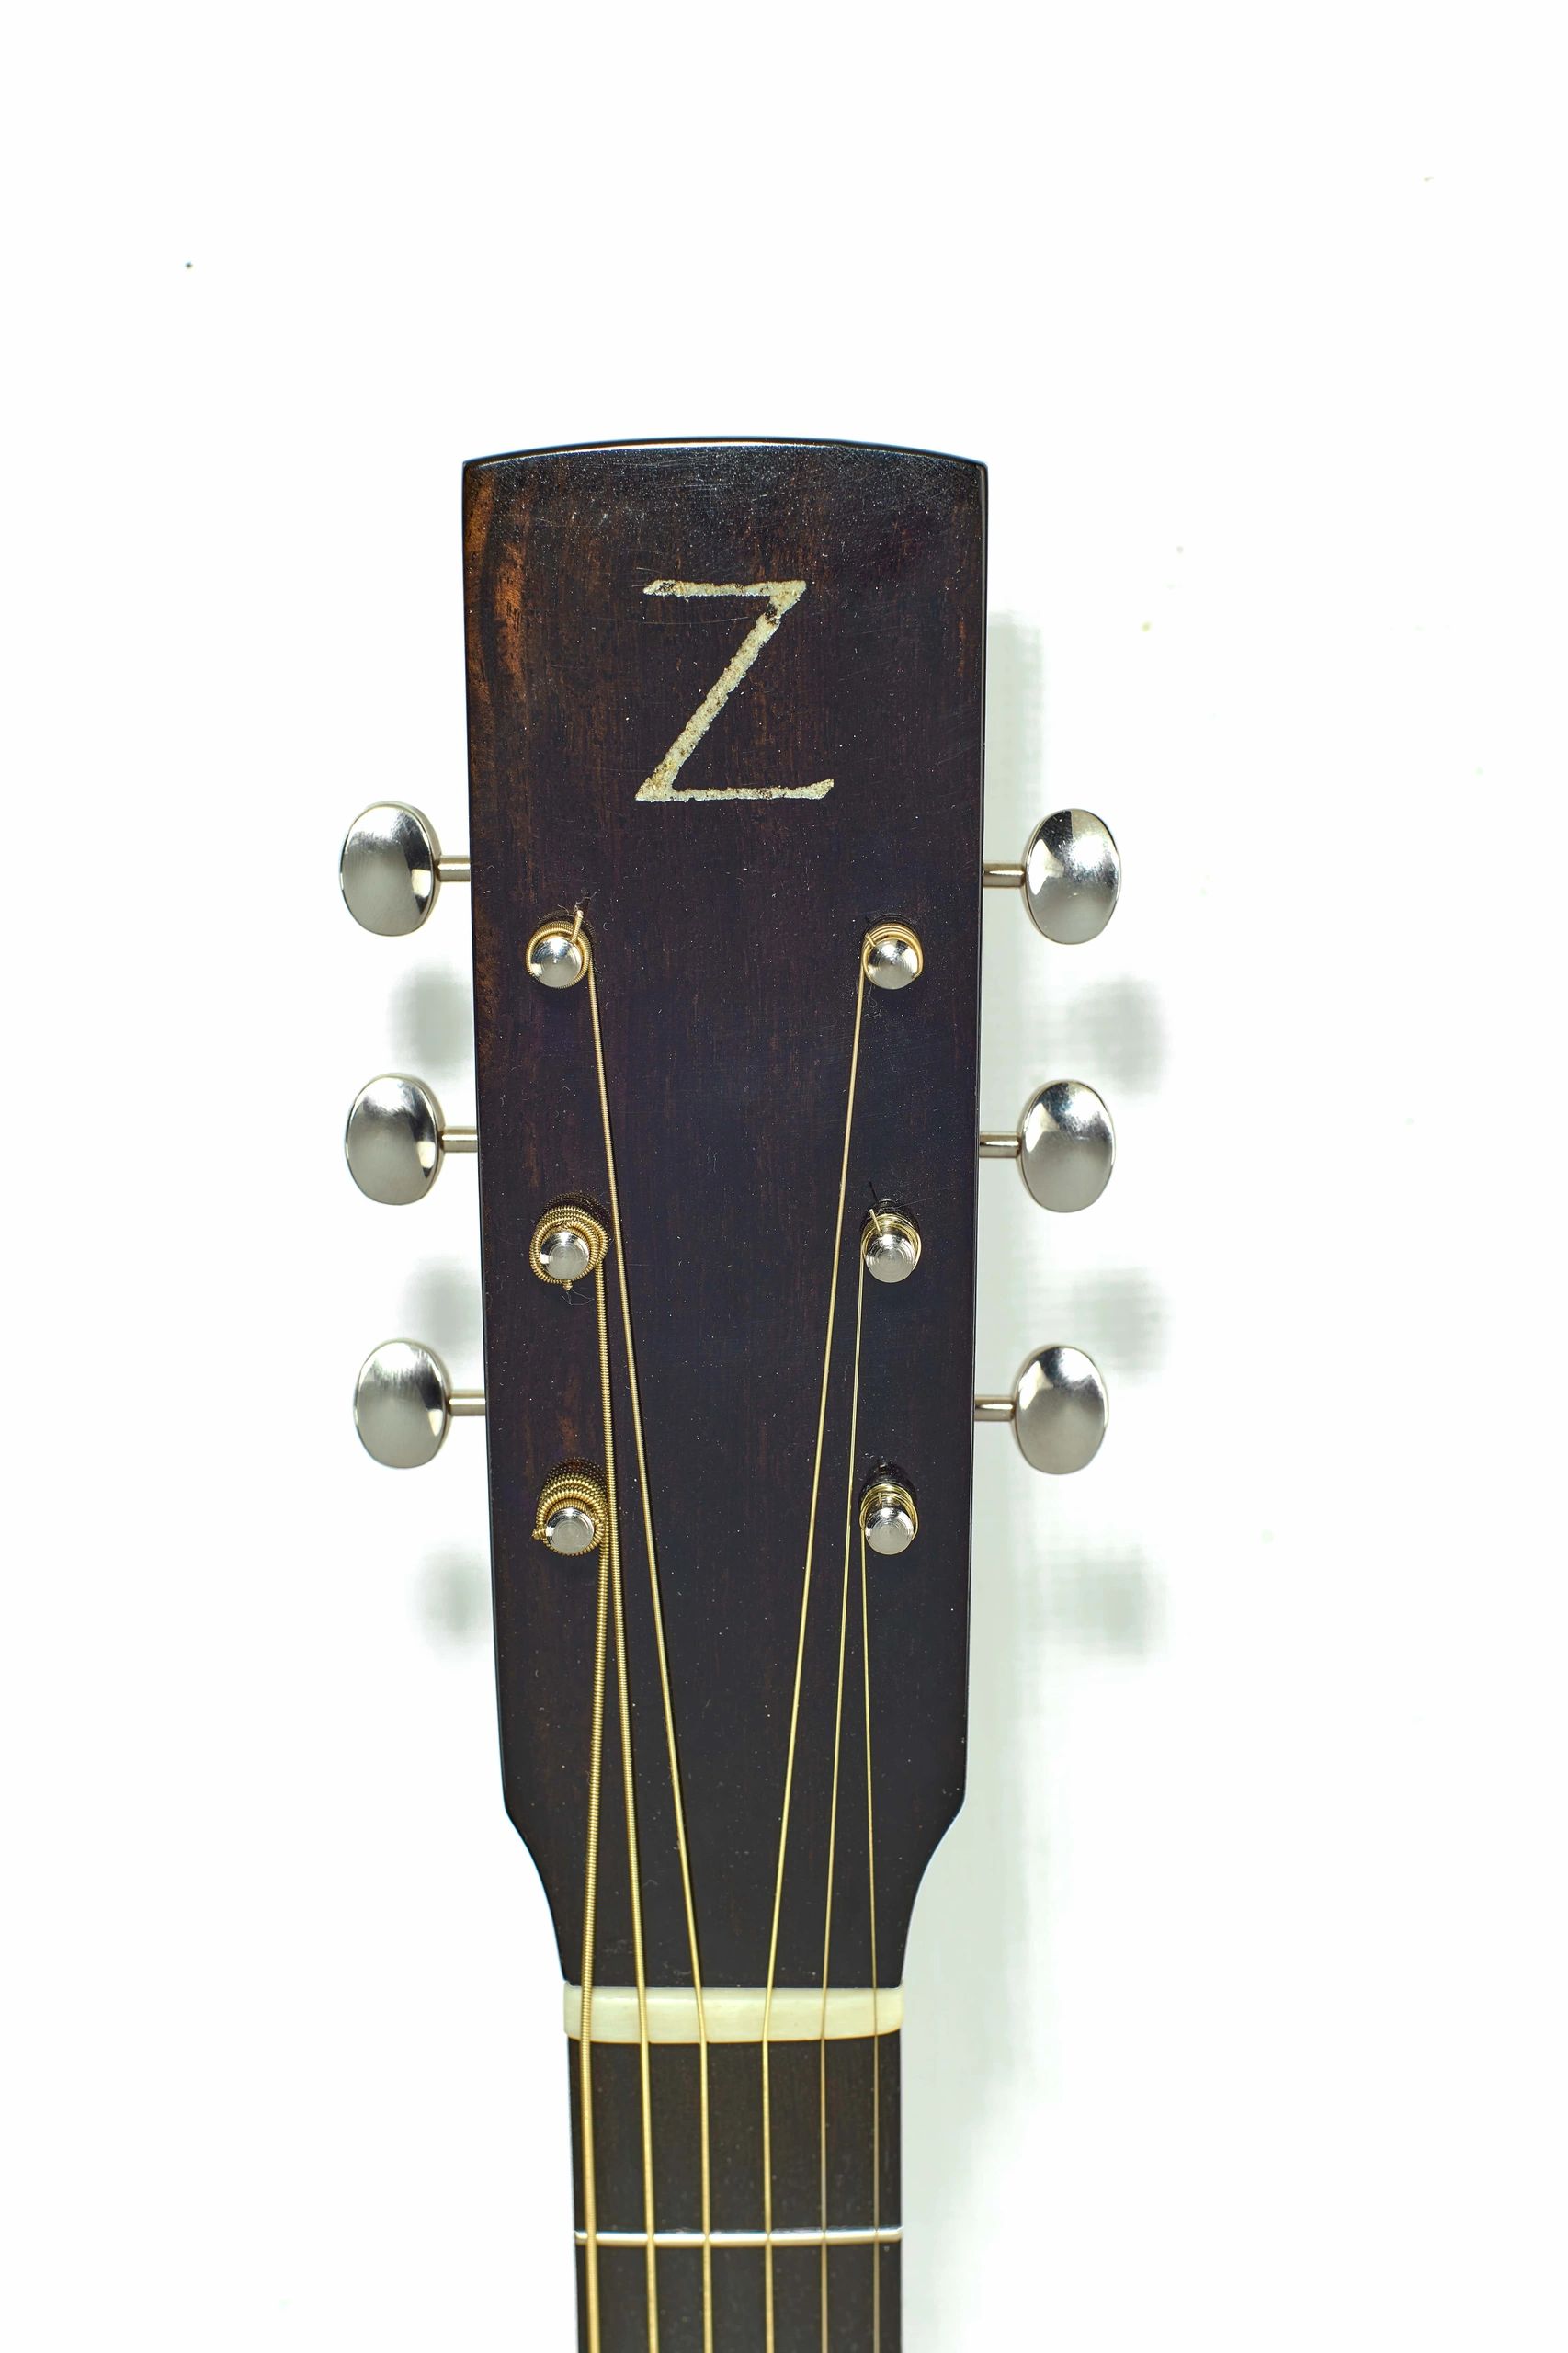 Tasmanian Blackwood/Adirondack Spruce OM
Hand-built acoustic guitar in Colorado Springs, CO